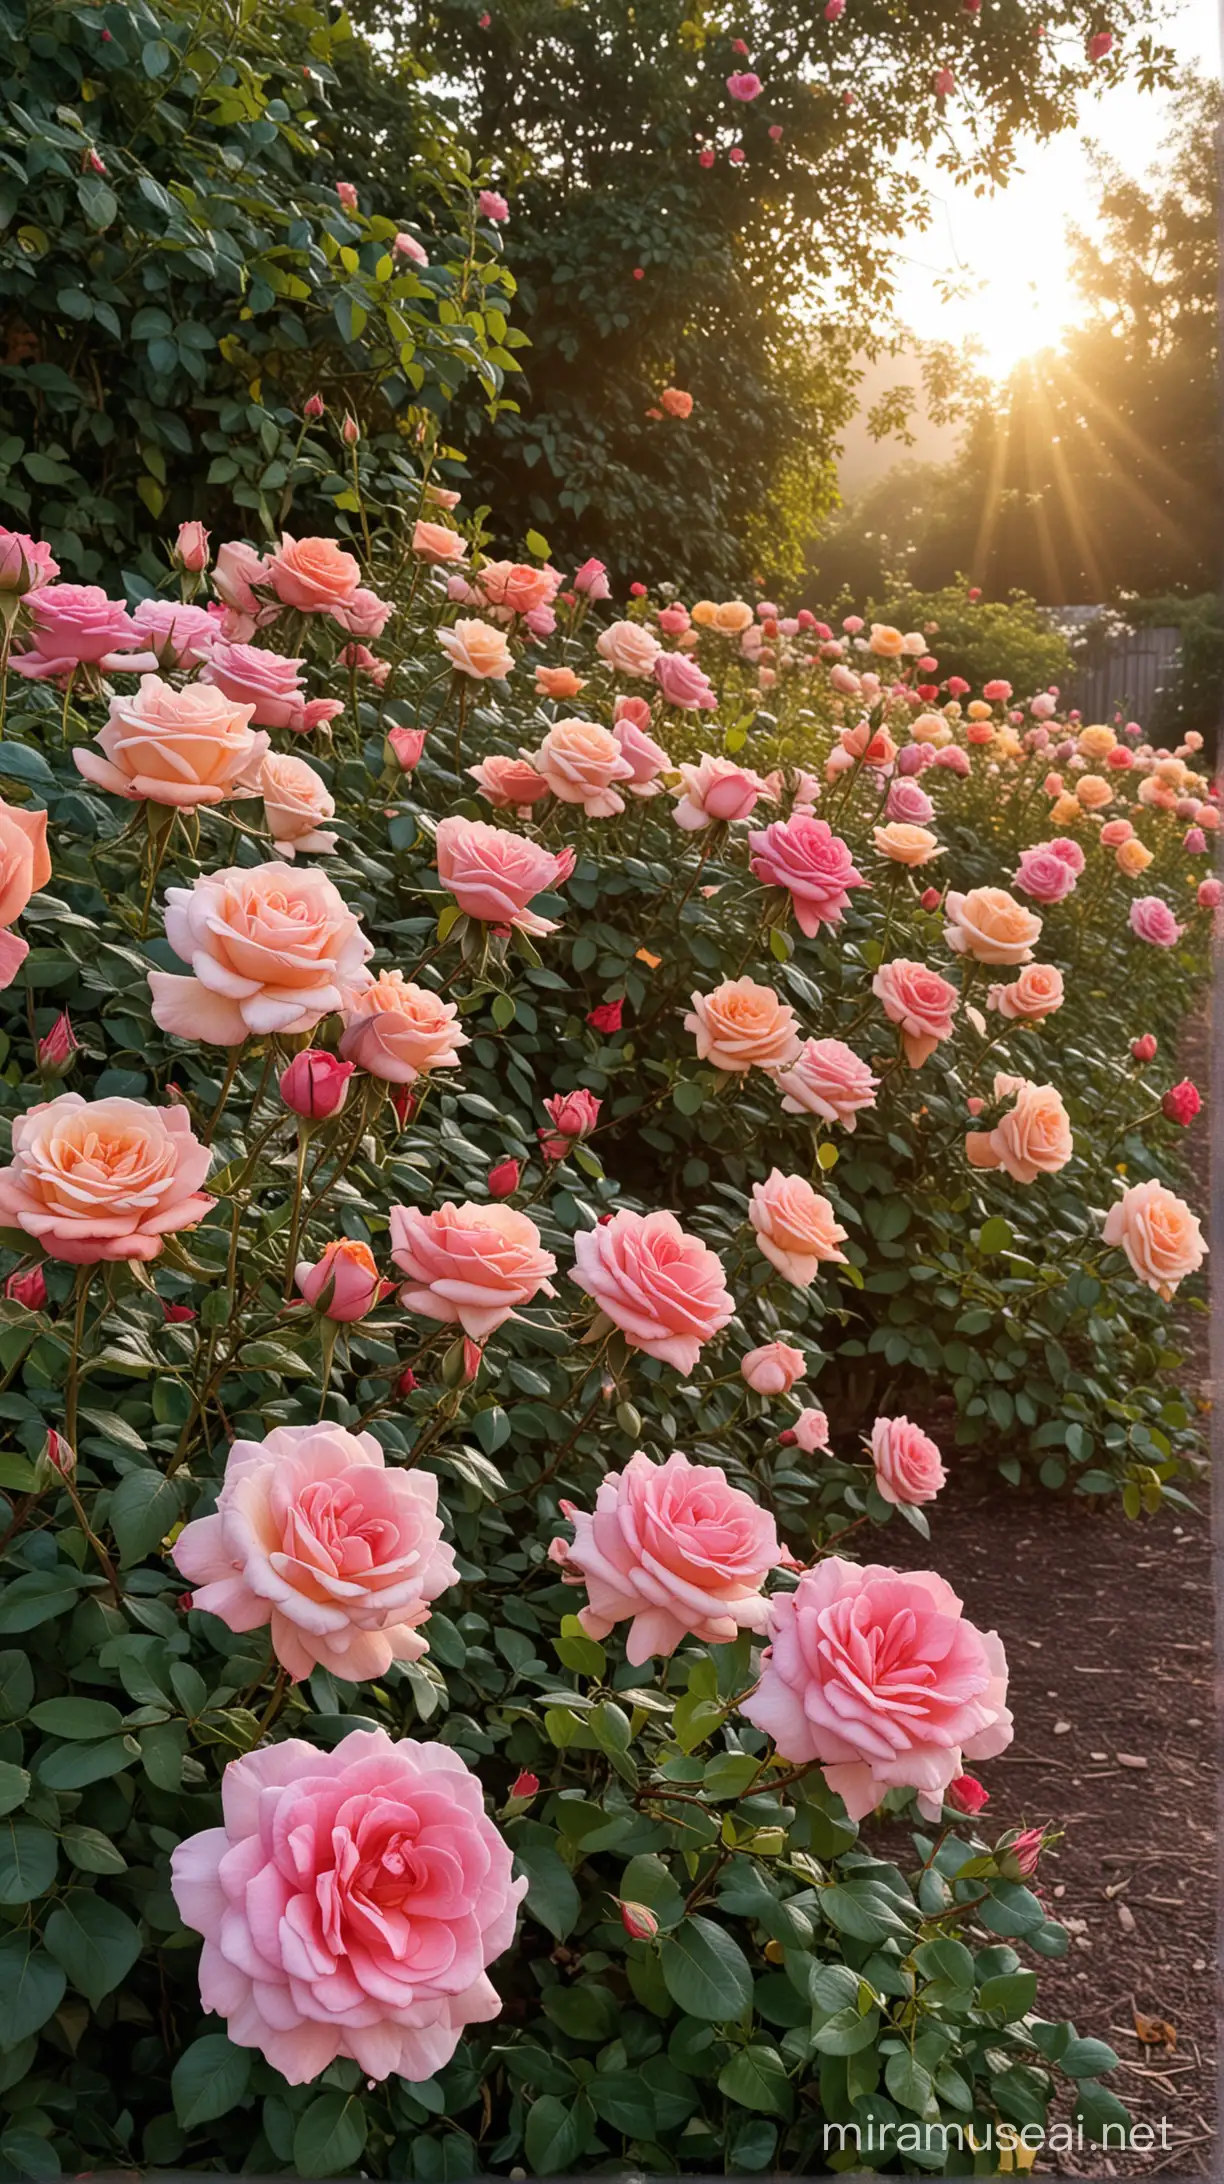 Multi roses garden, sunrise